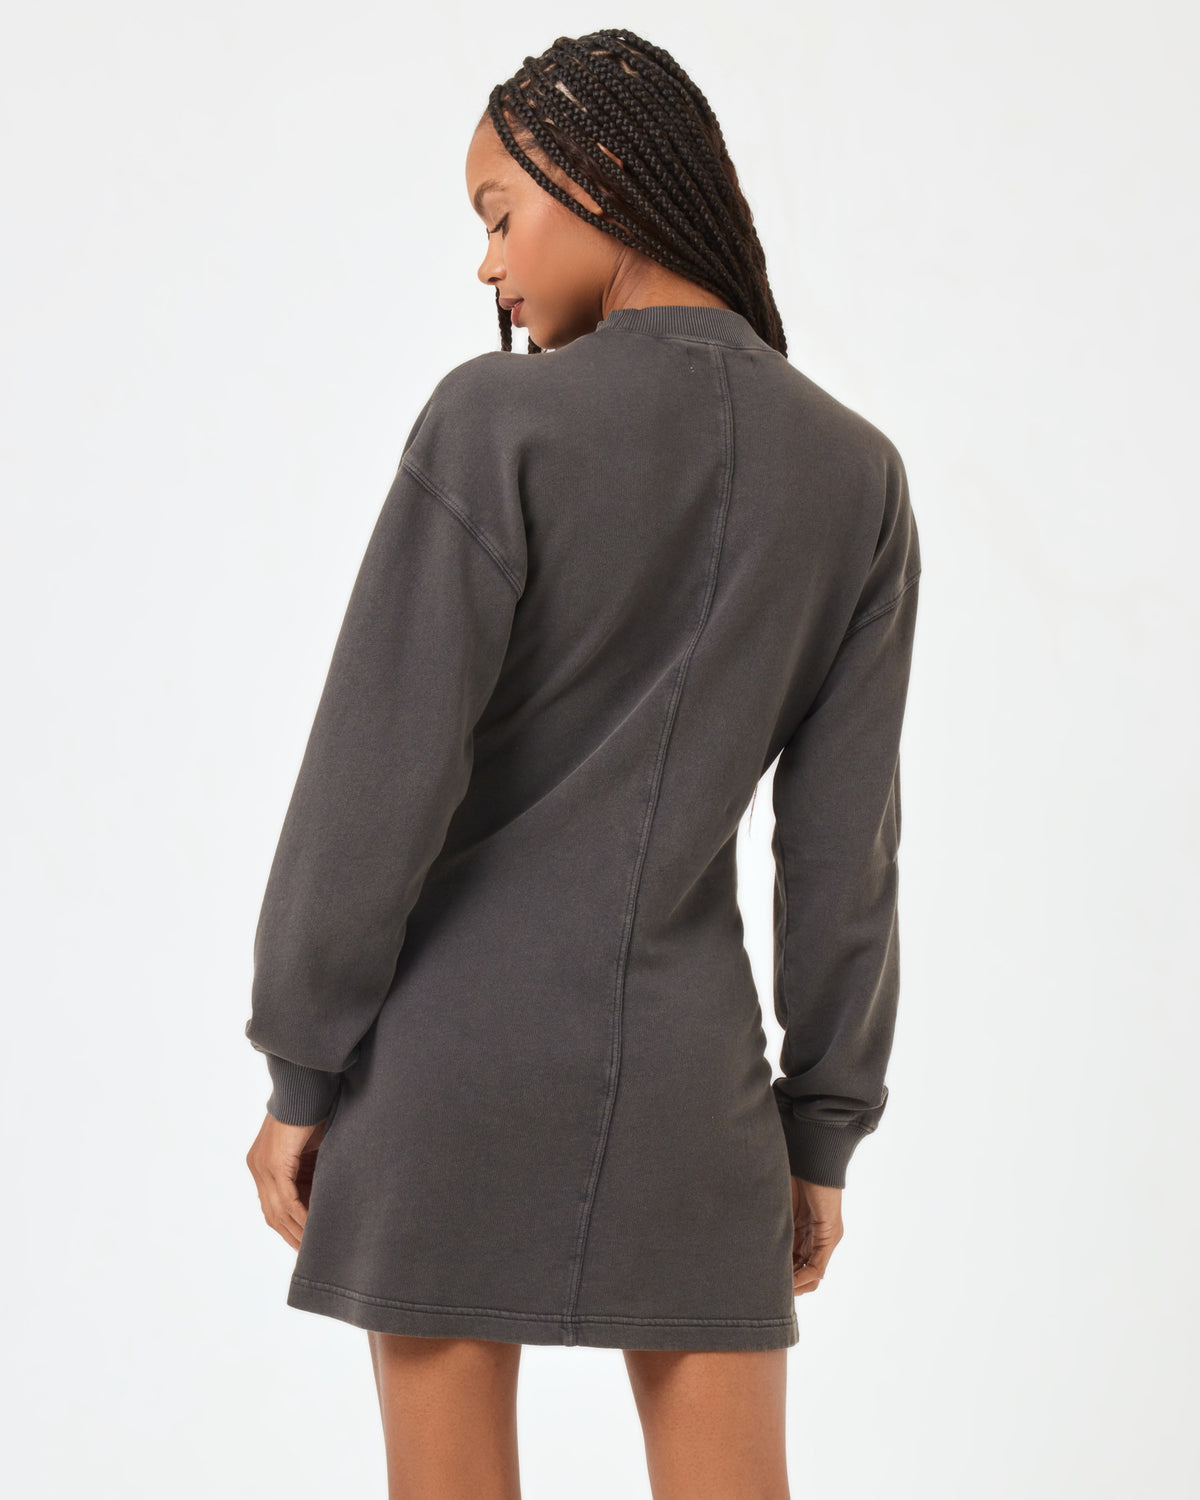 Asher Dress - Charcoal Ash | Model: Taelor (size: S)